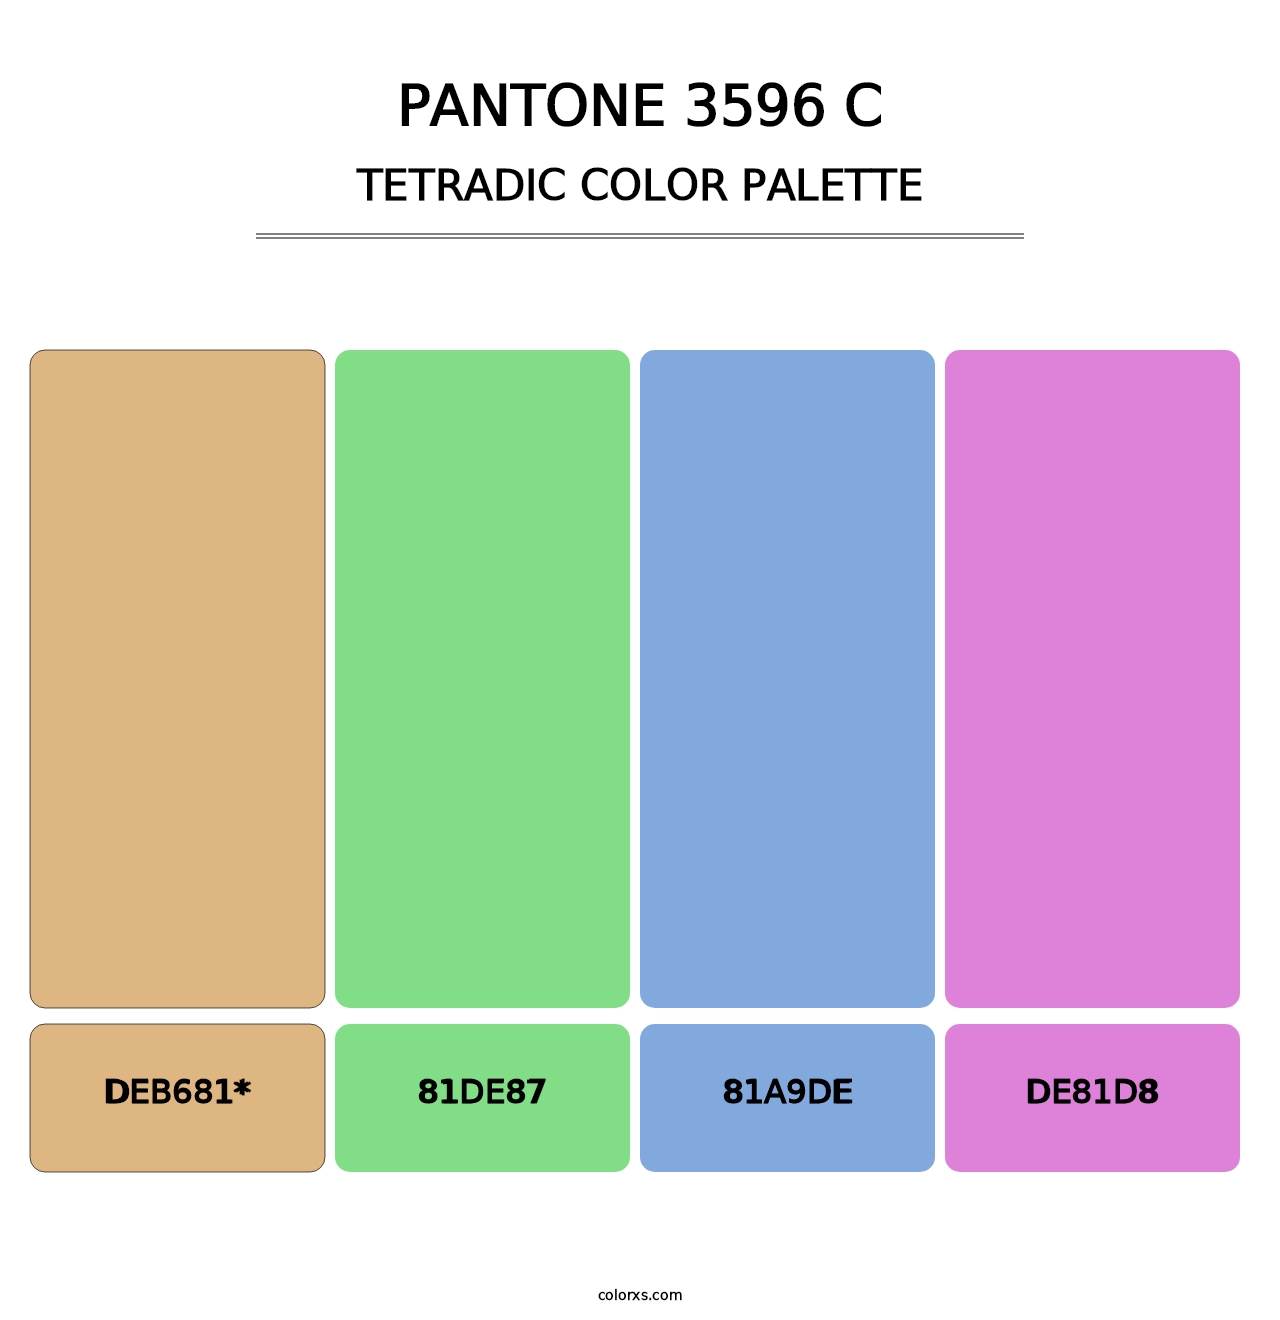 PANTONE 3596 C - Tetradic Color Palette